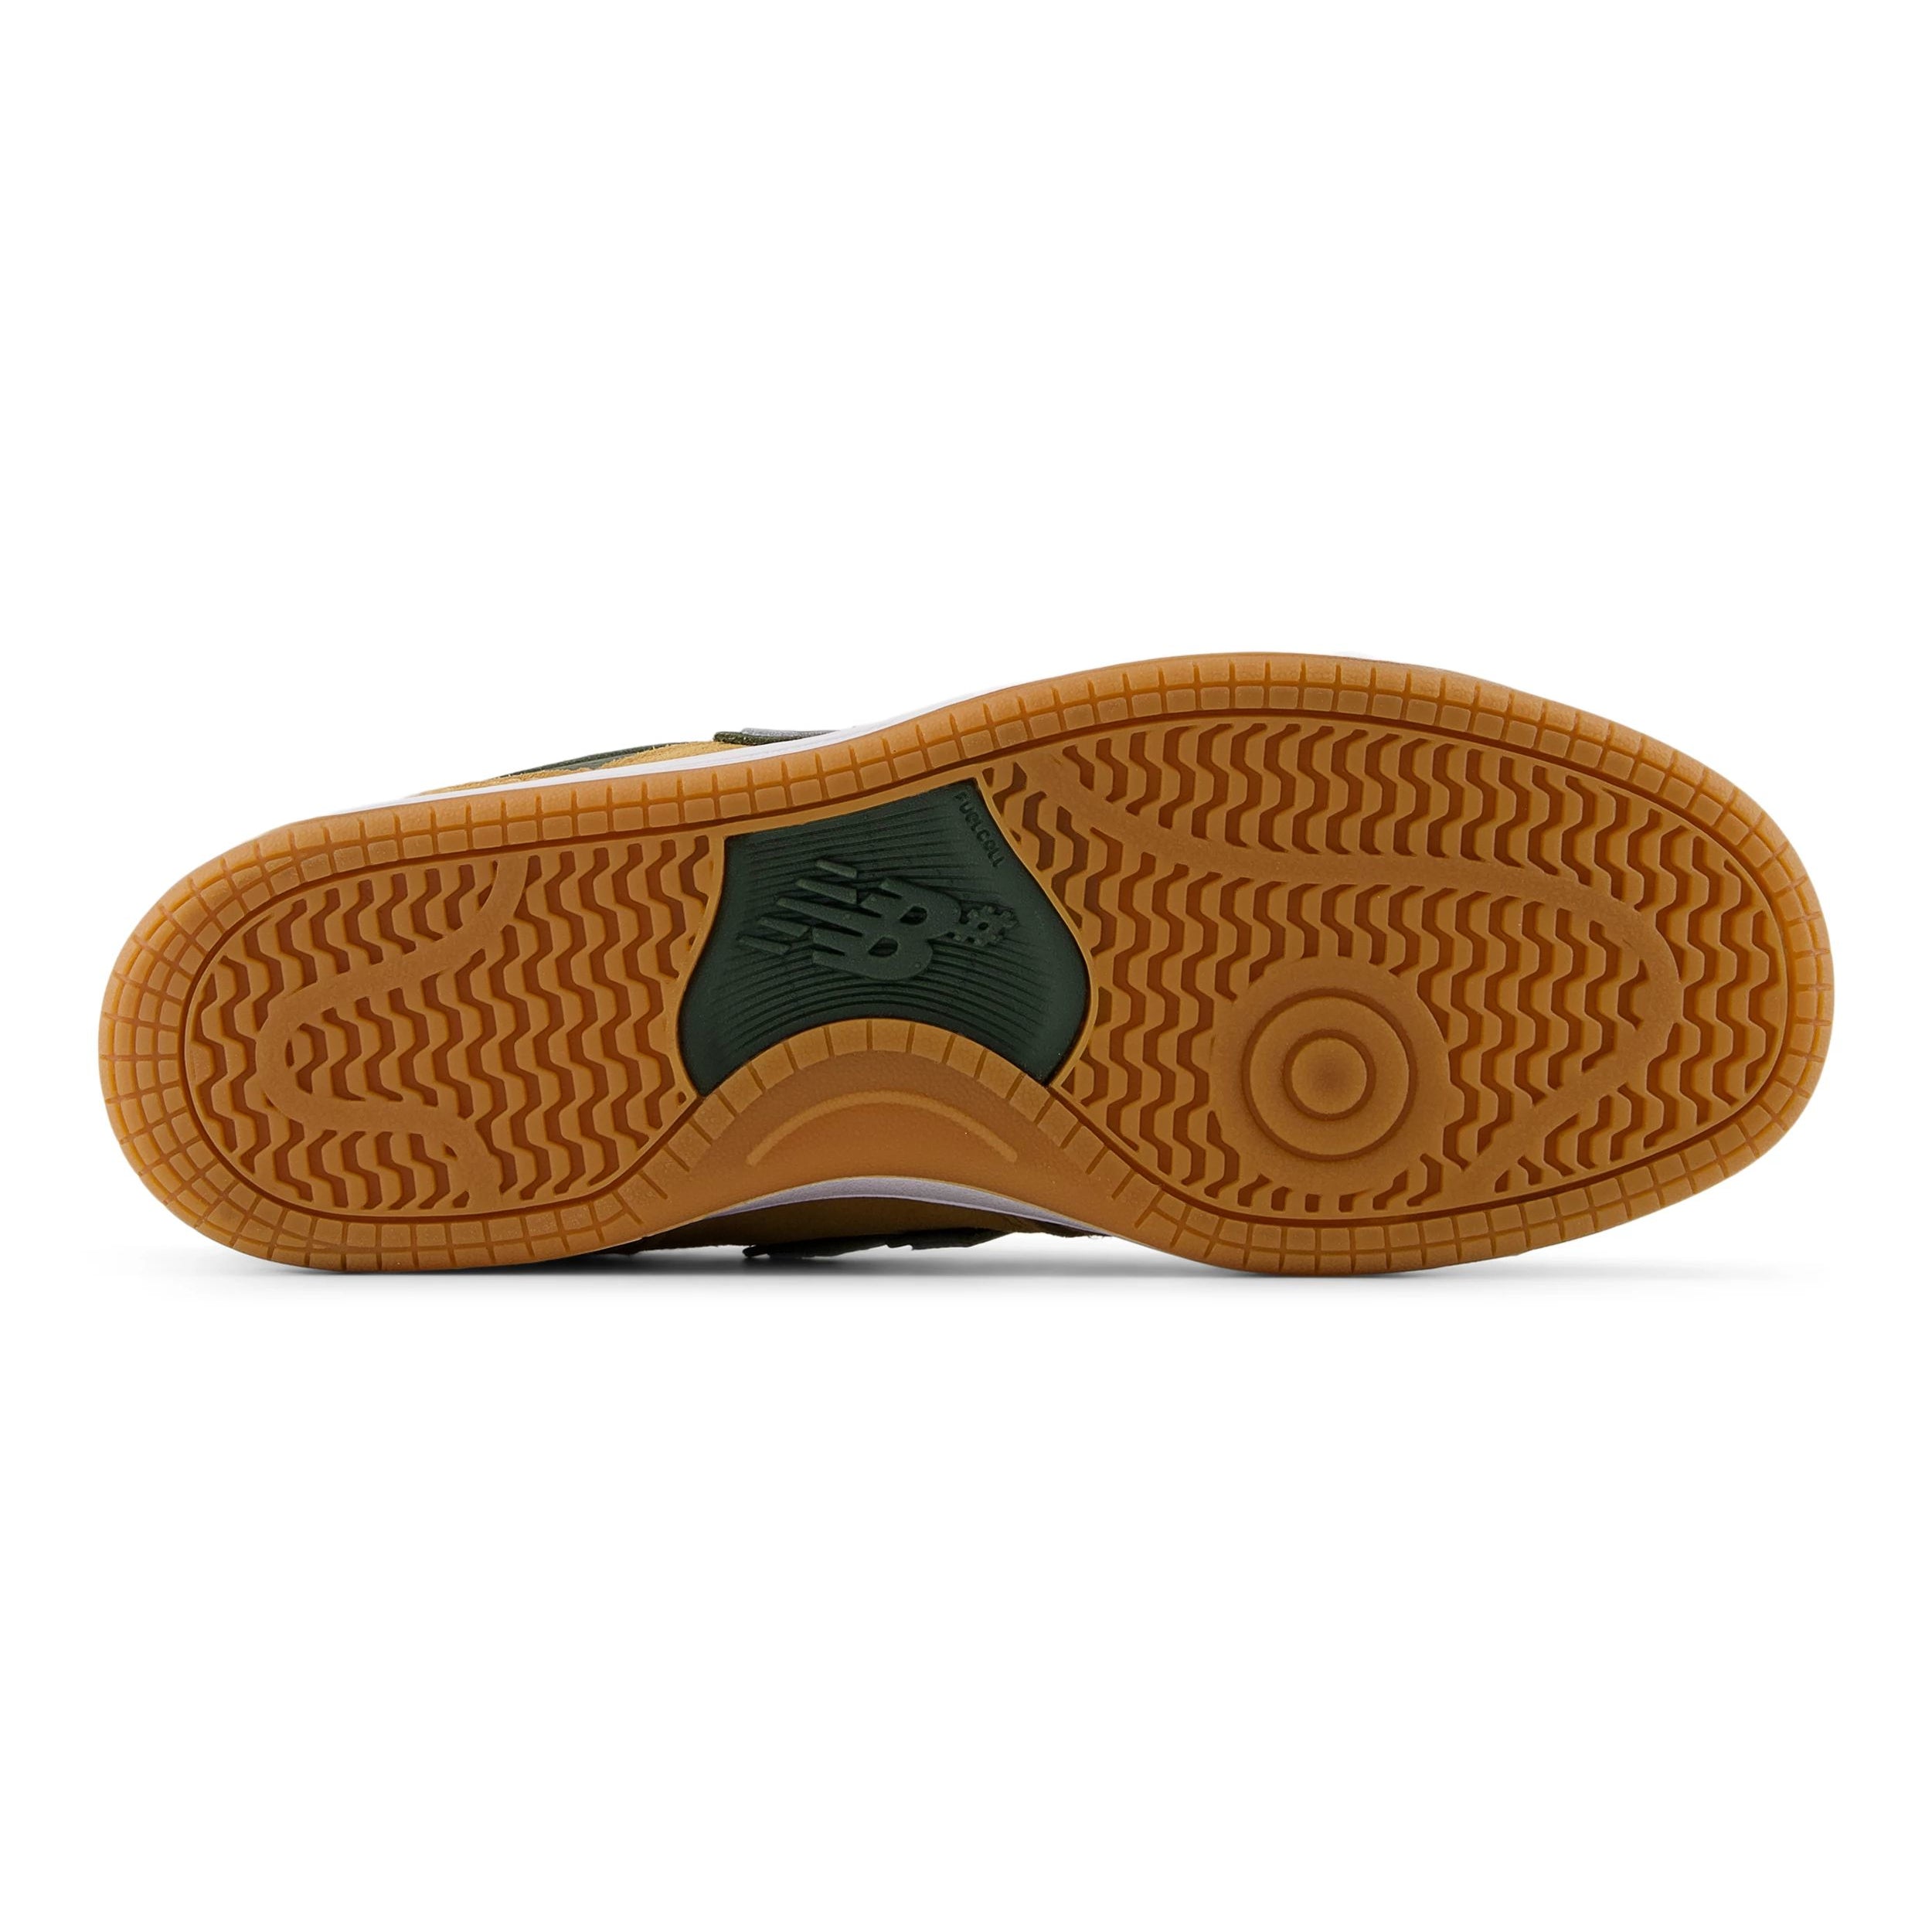 Tan/Green 480 NB Numeric Skate Shoe Bottom